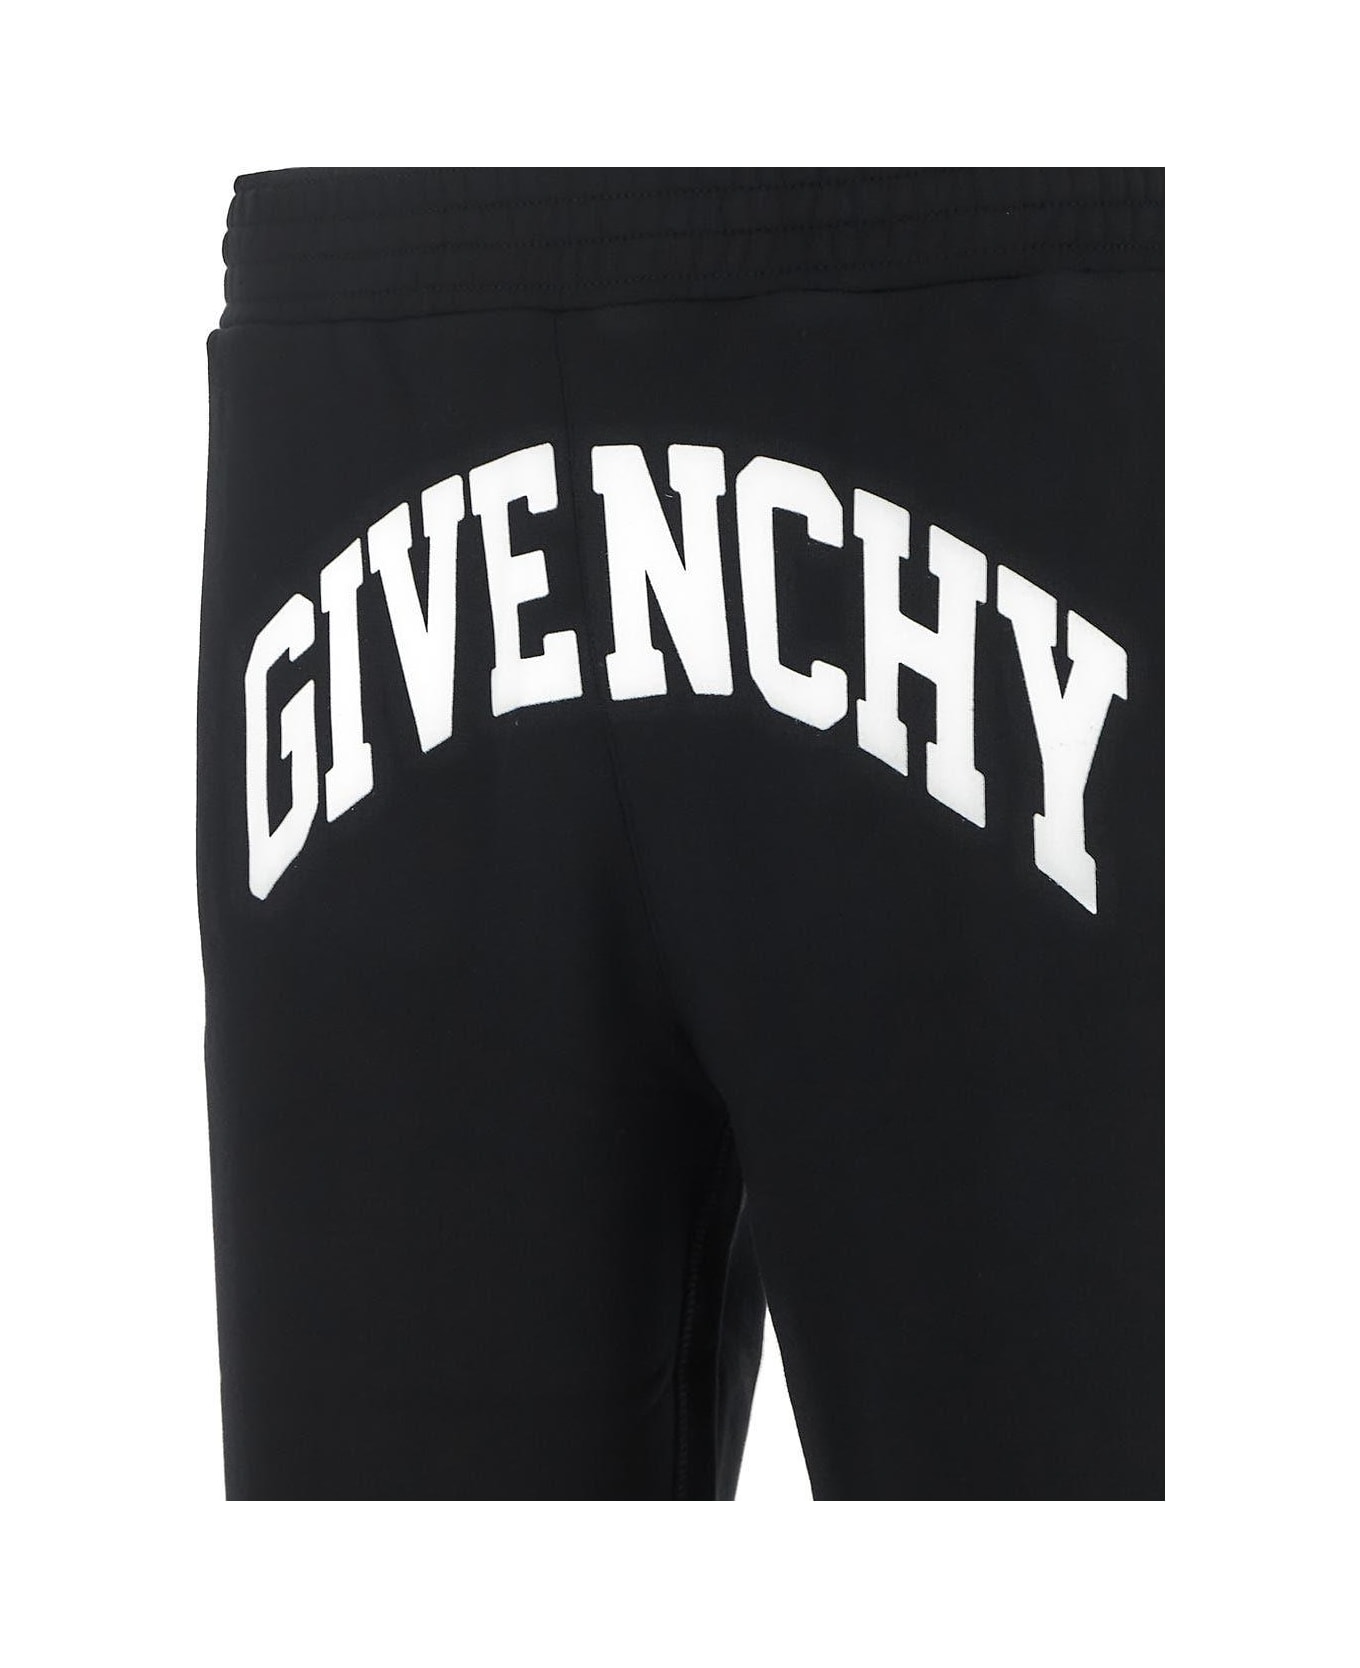 Givenchy Black Sweatpants - Black